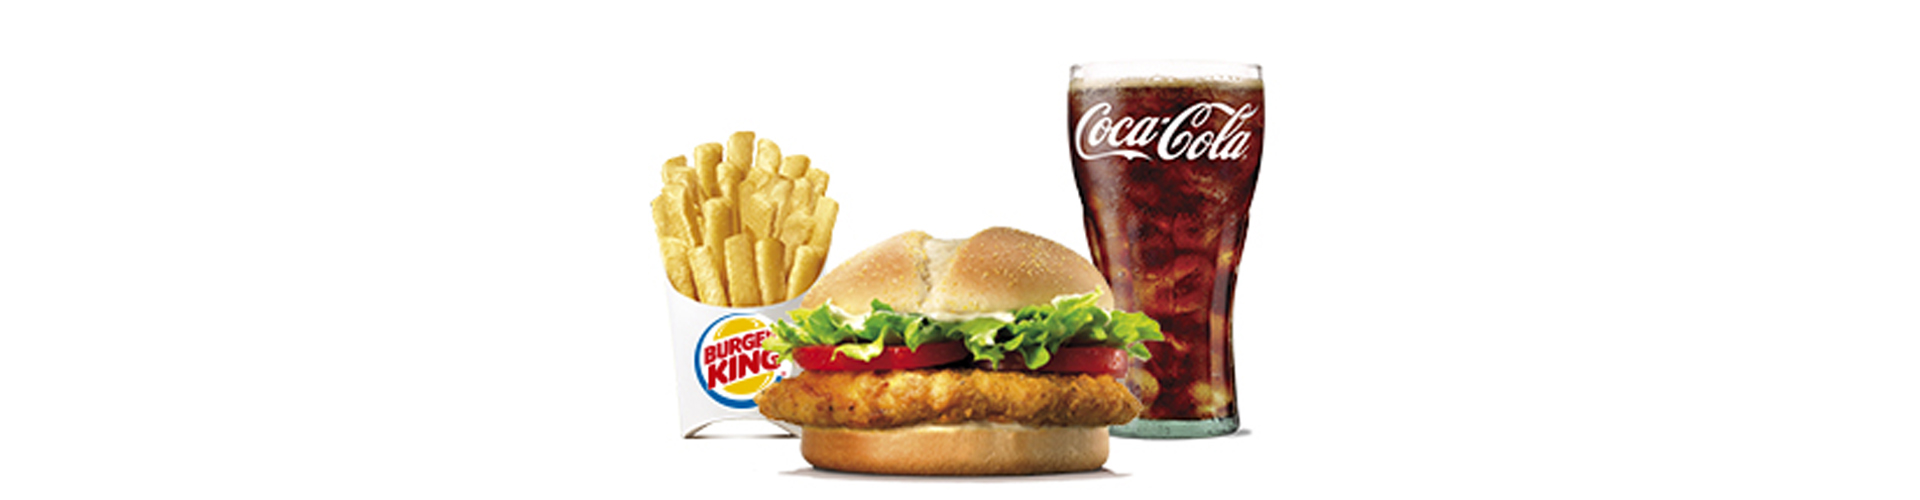 burgerking-40001721-sprite-ensalada